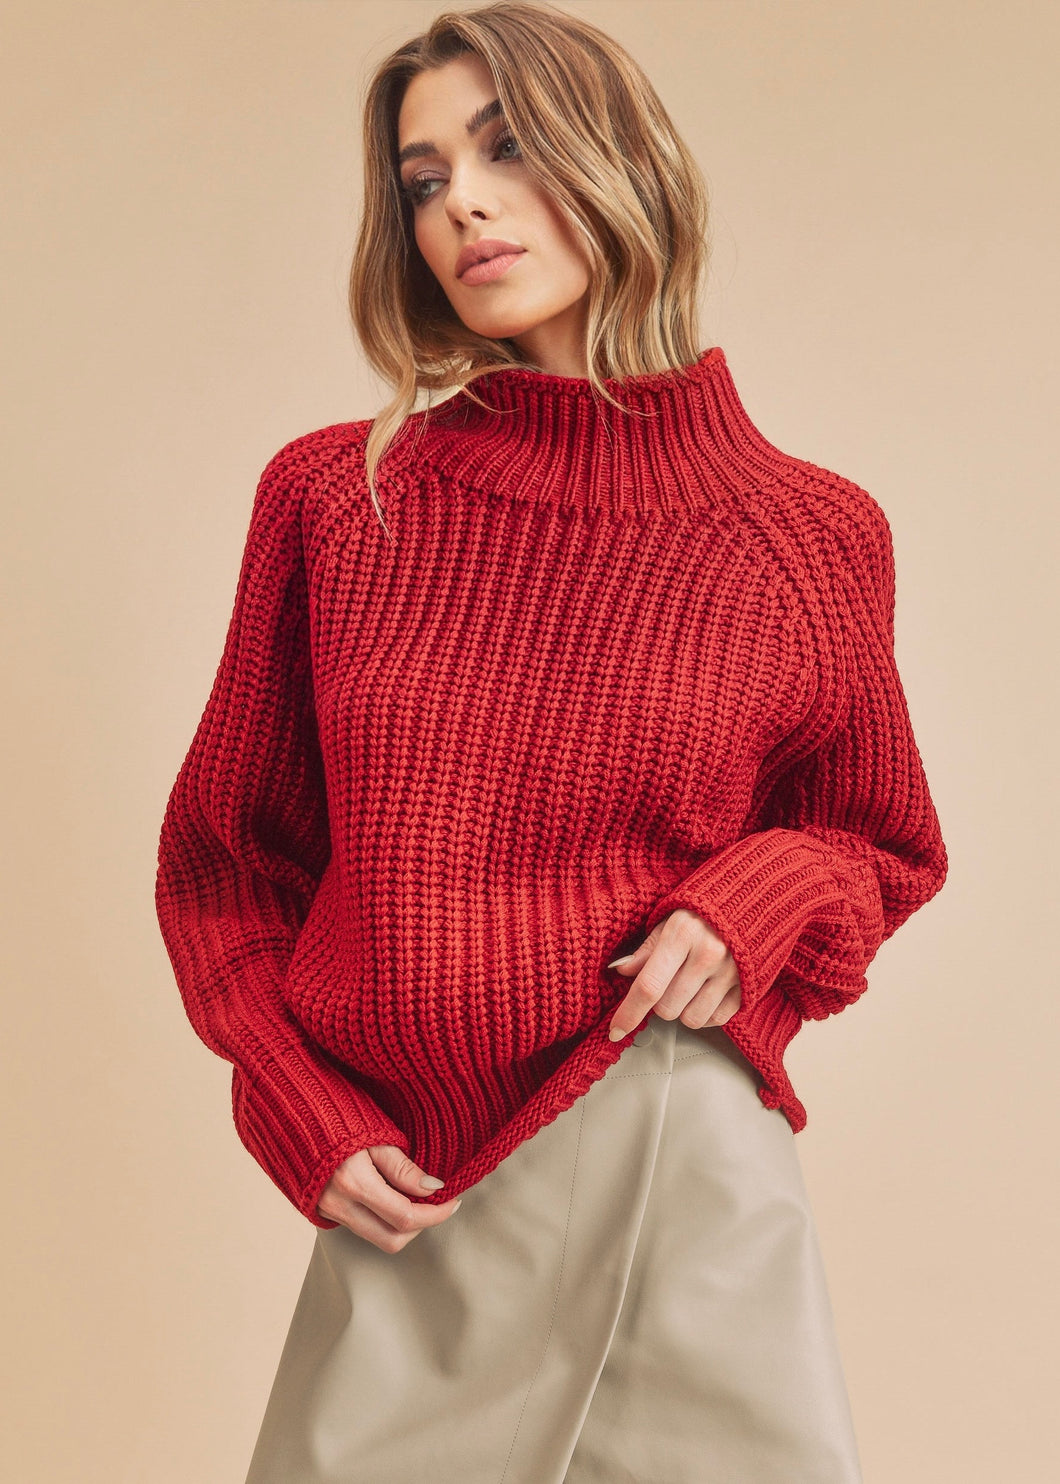 Eleanor Sweater